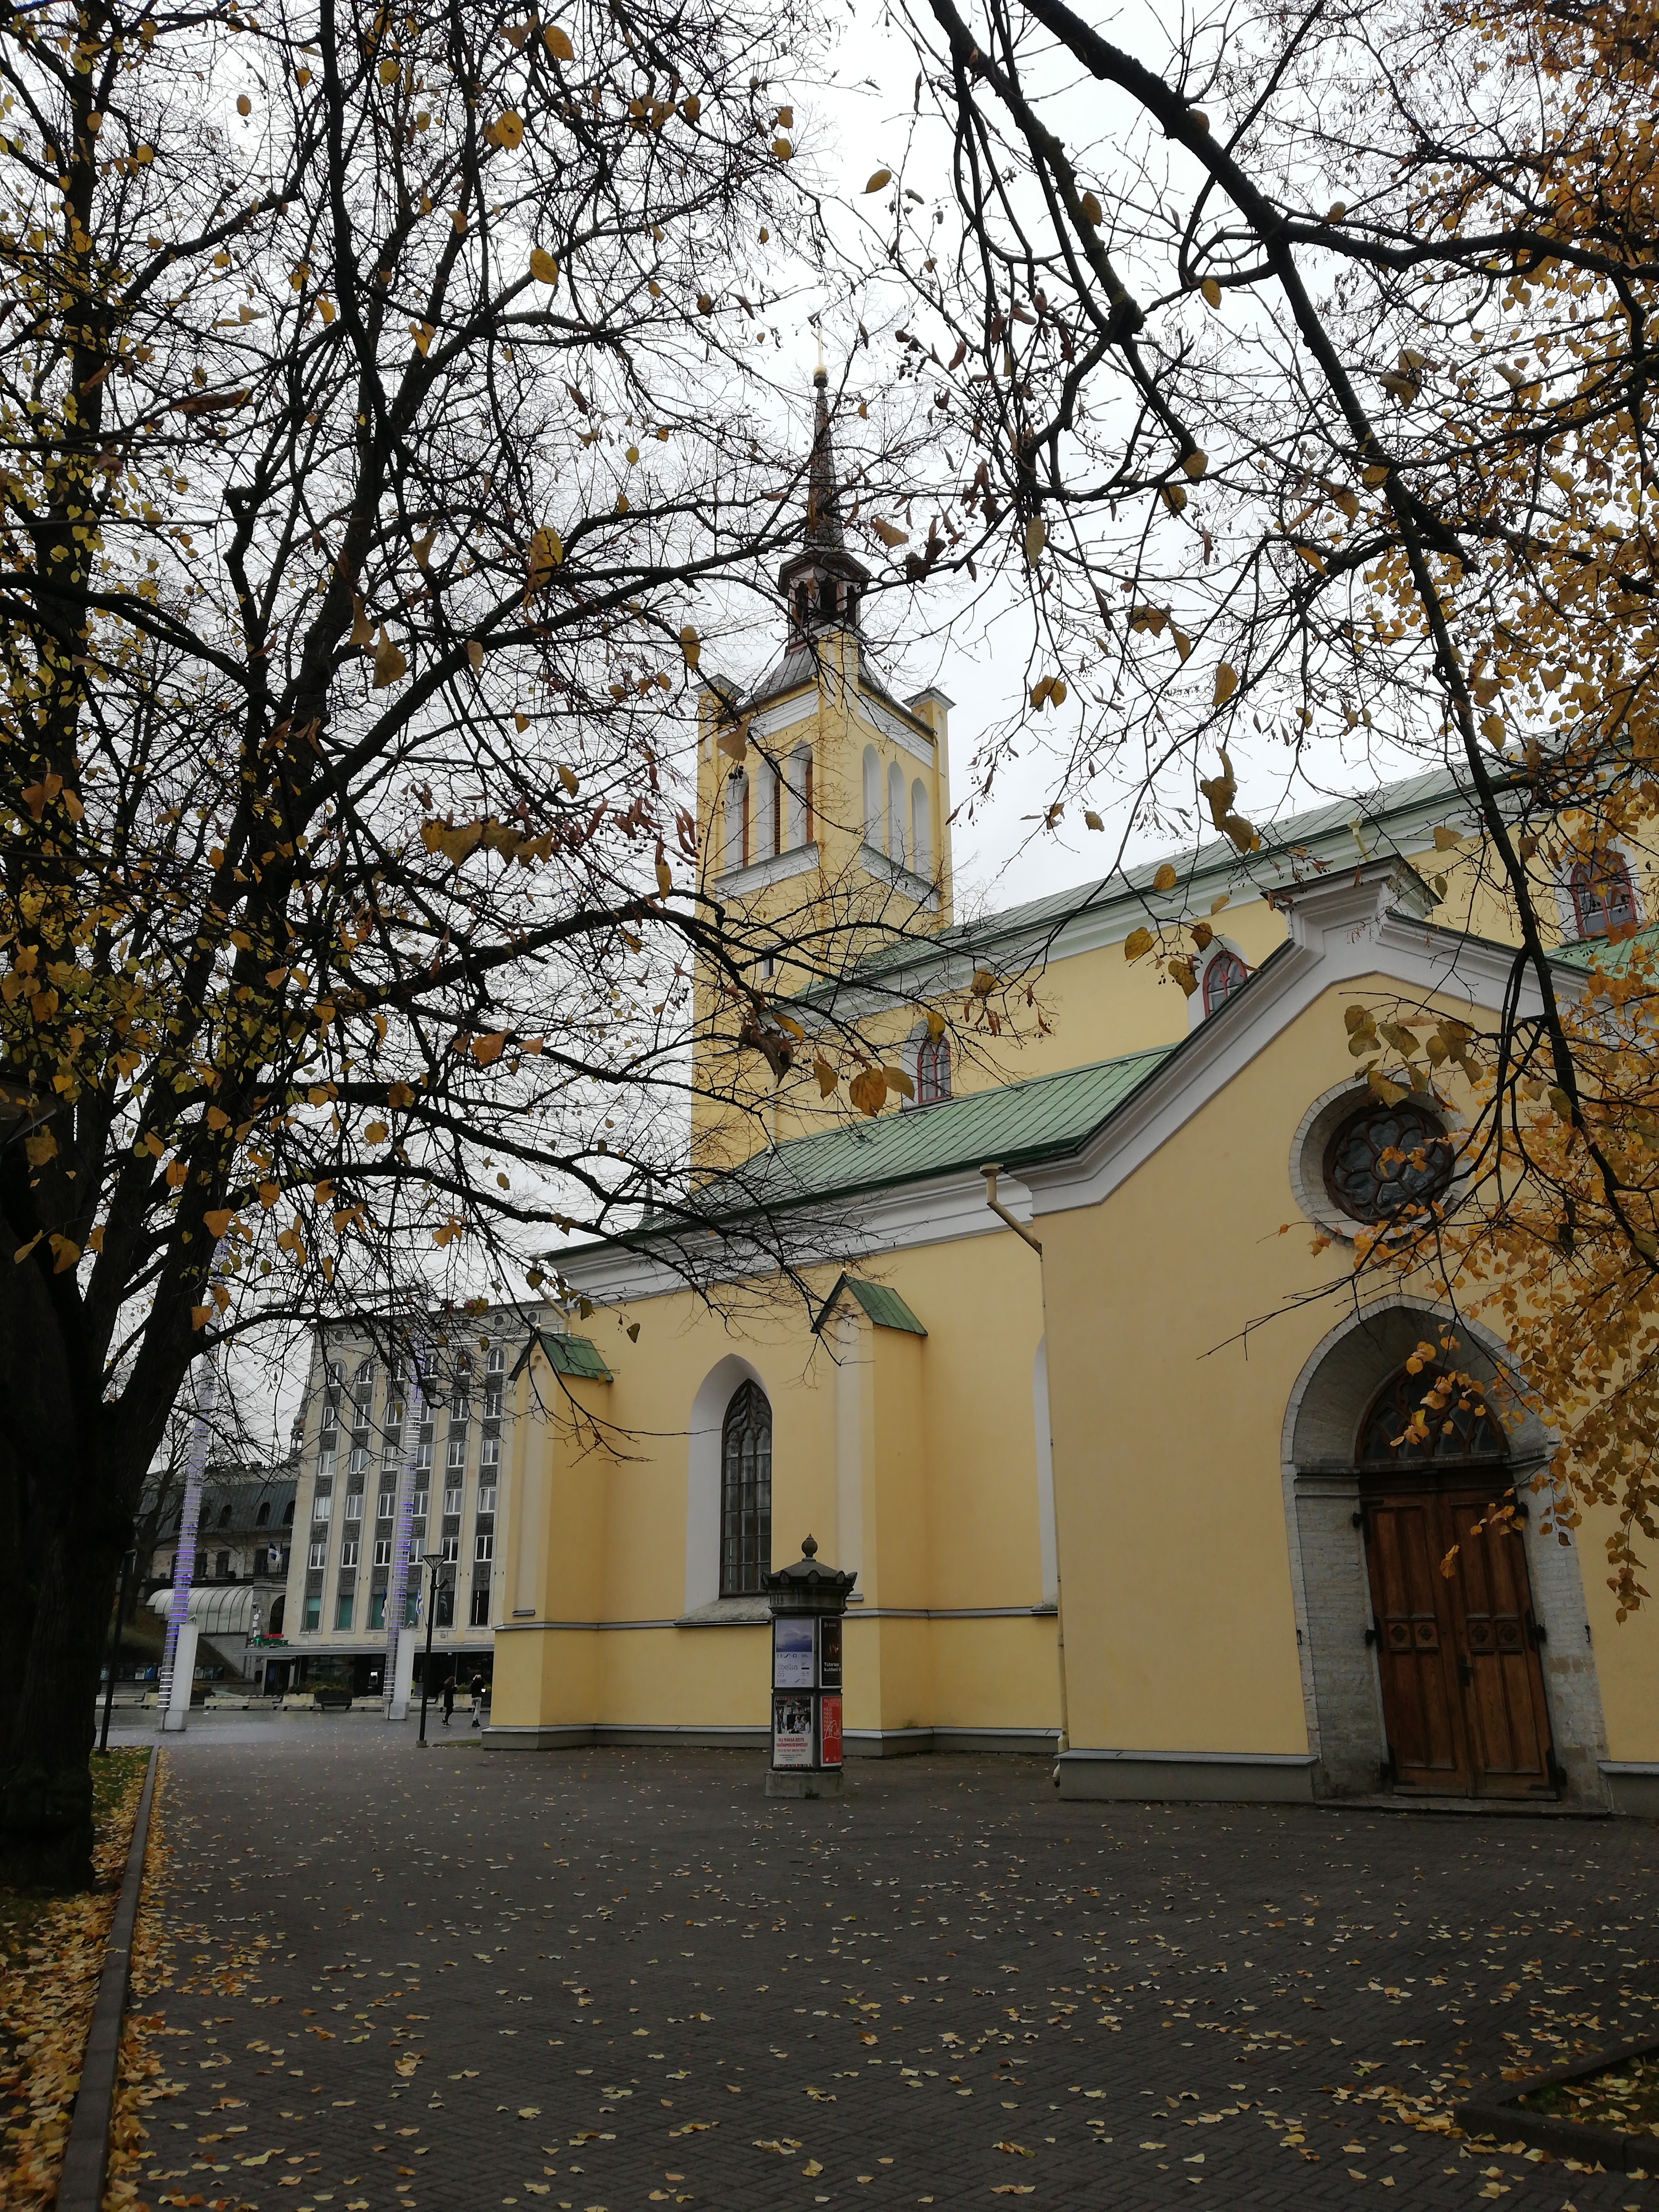 View of the Tallinn Jaan Church rephoto